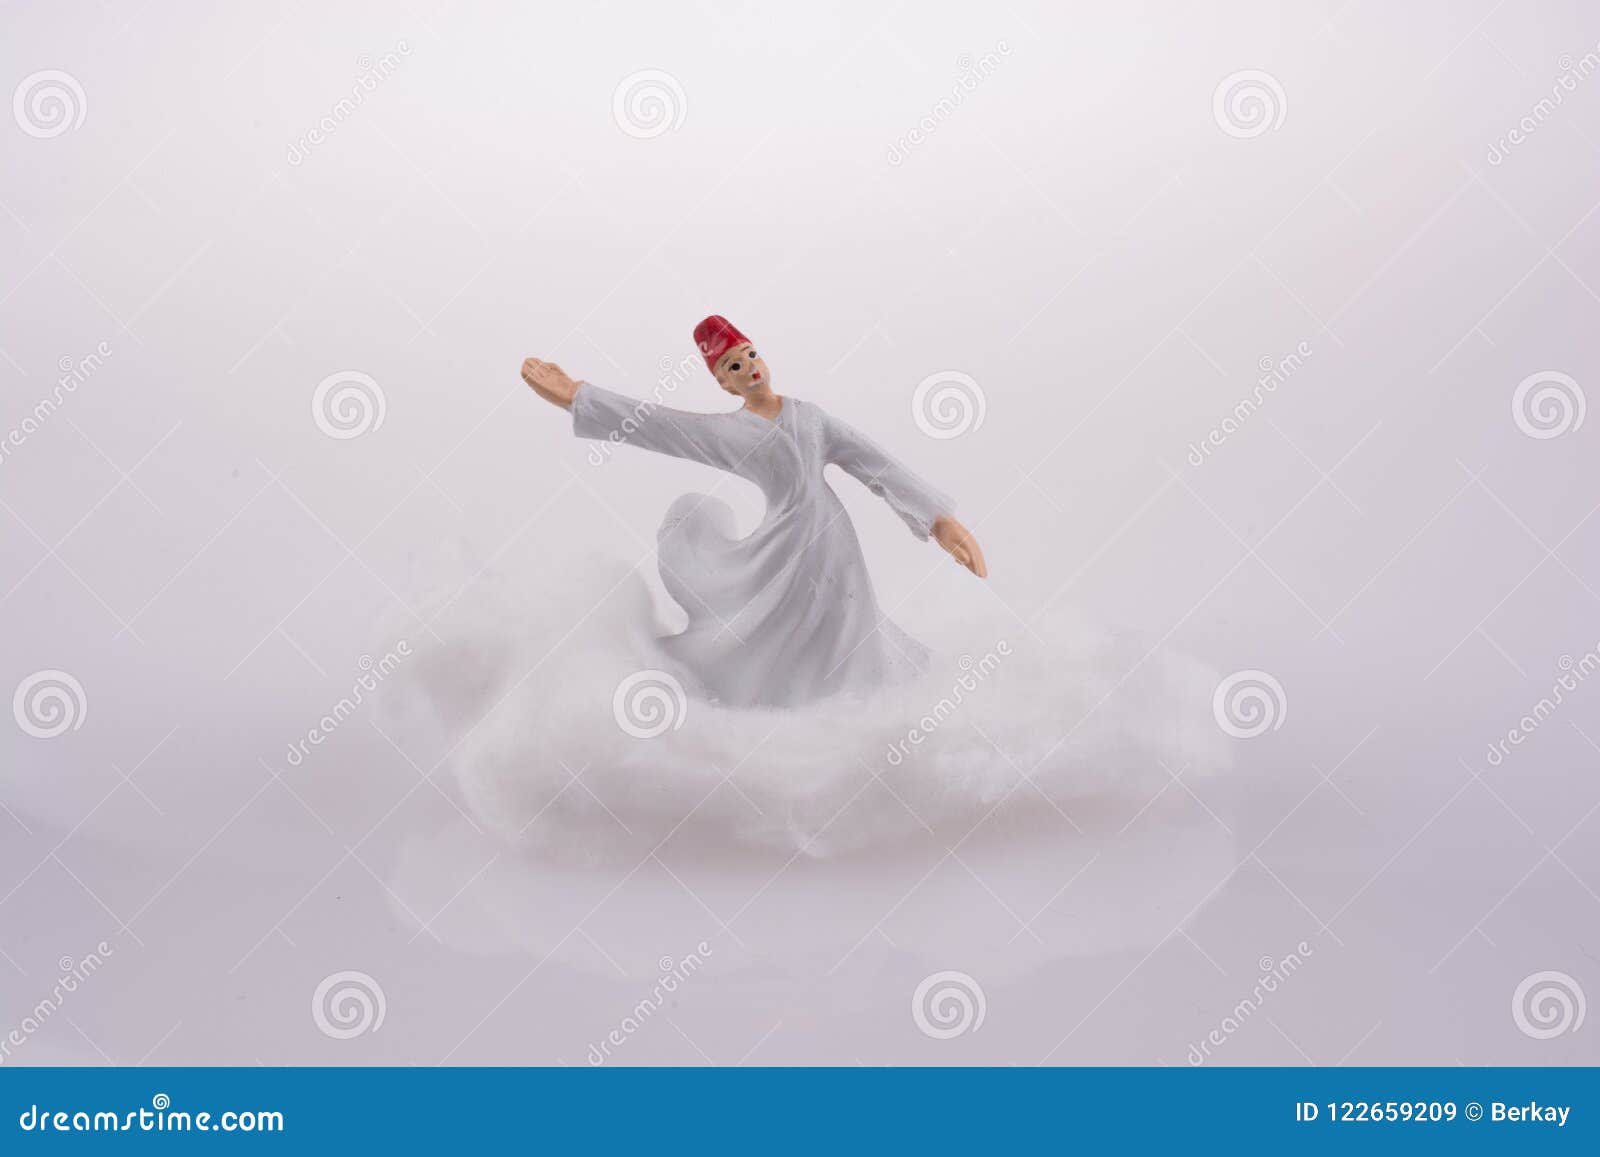 sufi derviÃÅ¸ on a cloud